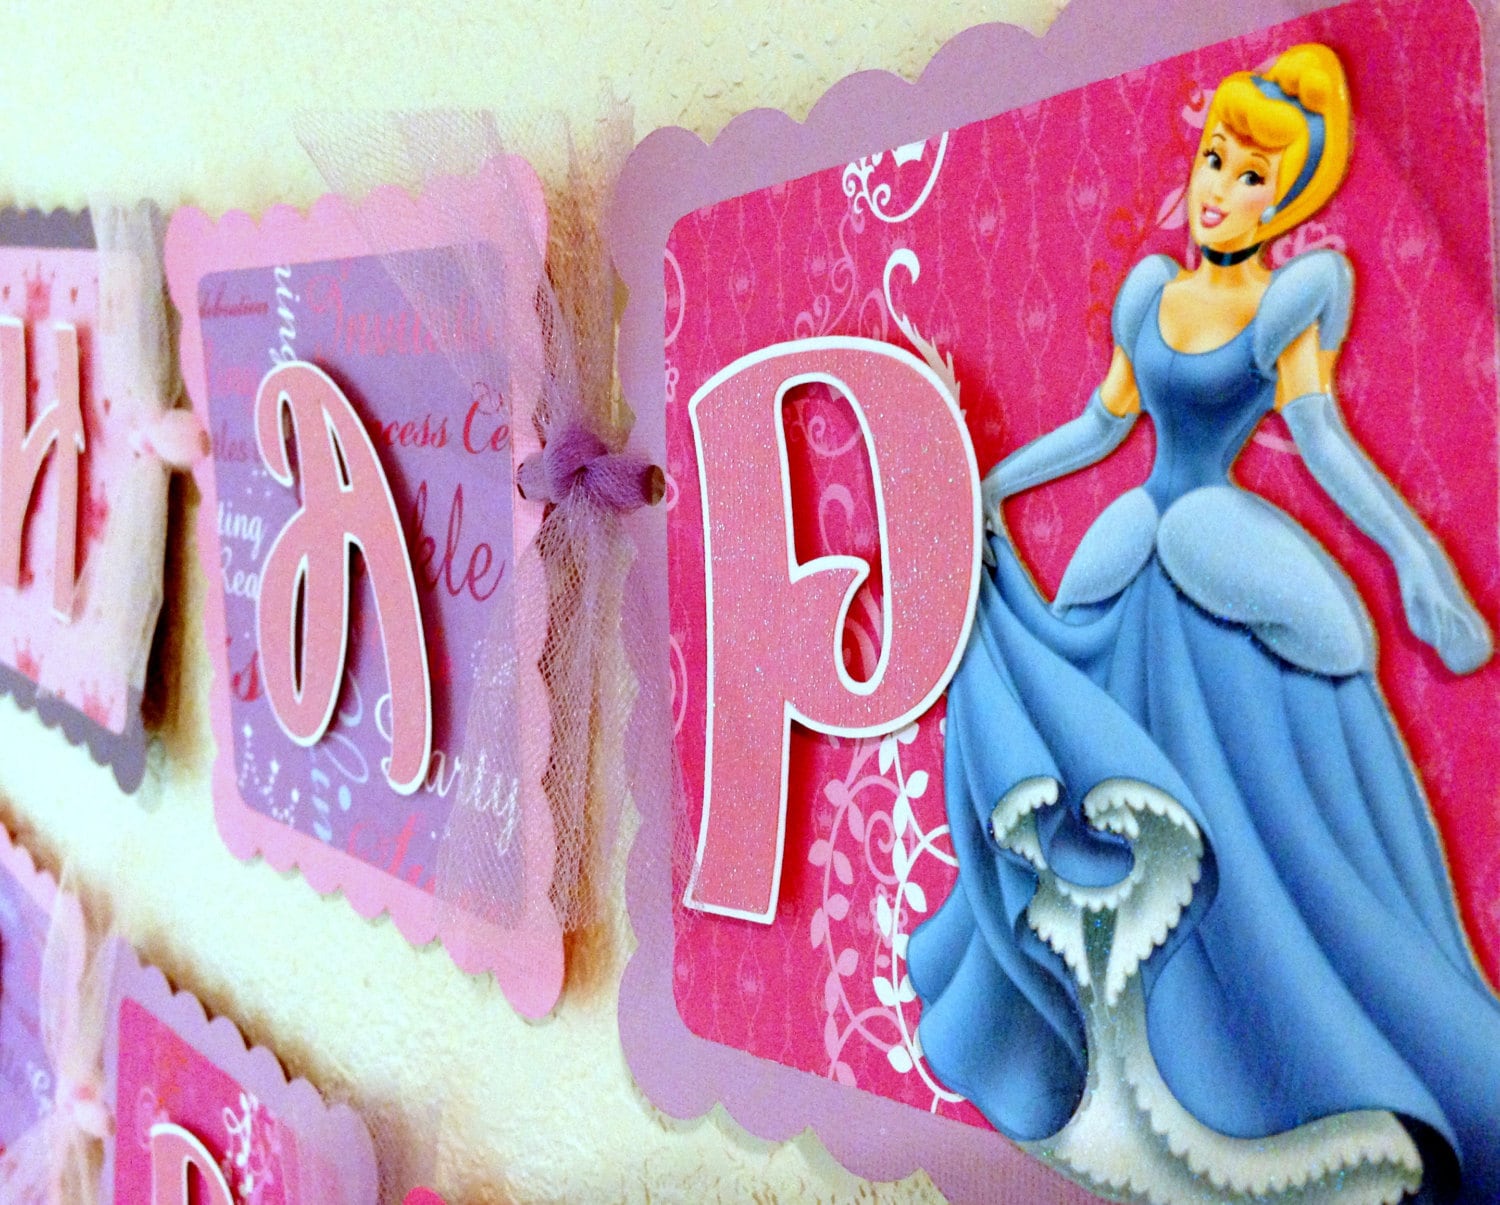 disney-princess-birthday-banner-qbirthdayk